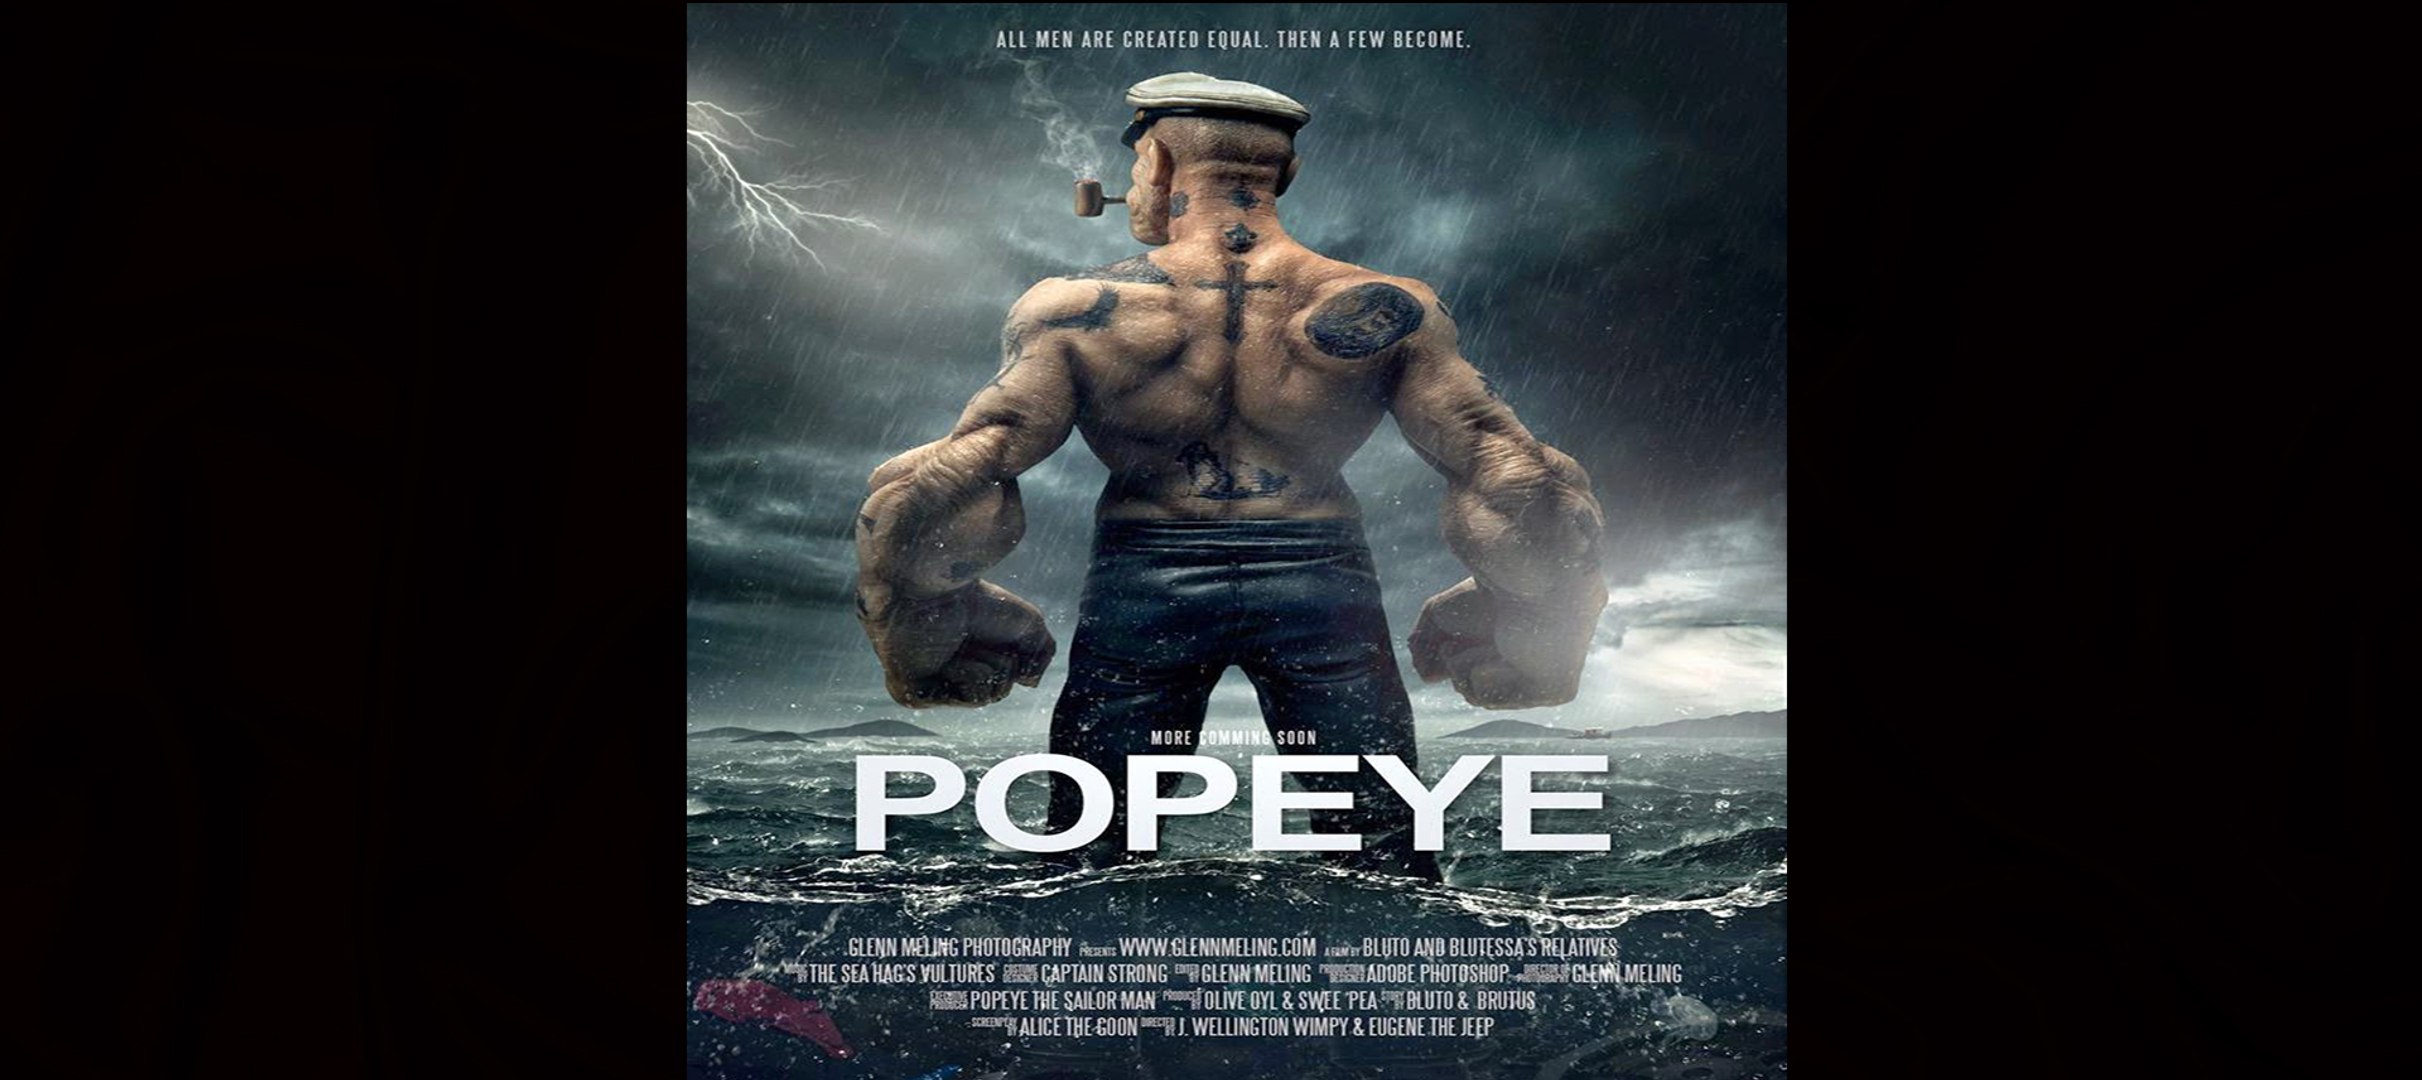 Popeye (2016) Trailer HD - video Dailymotion